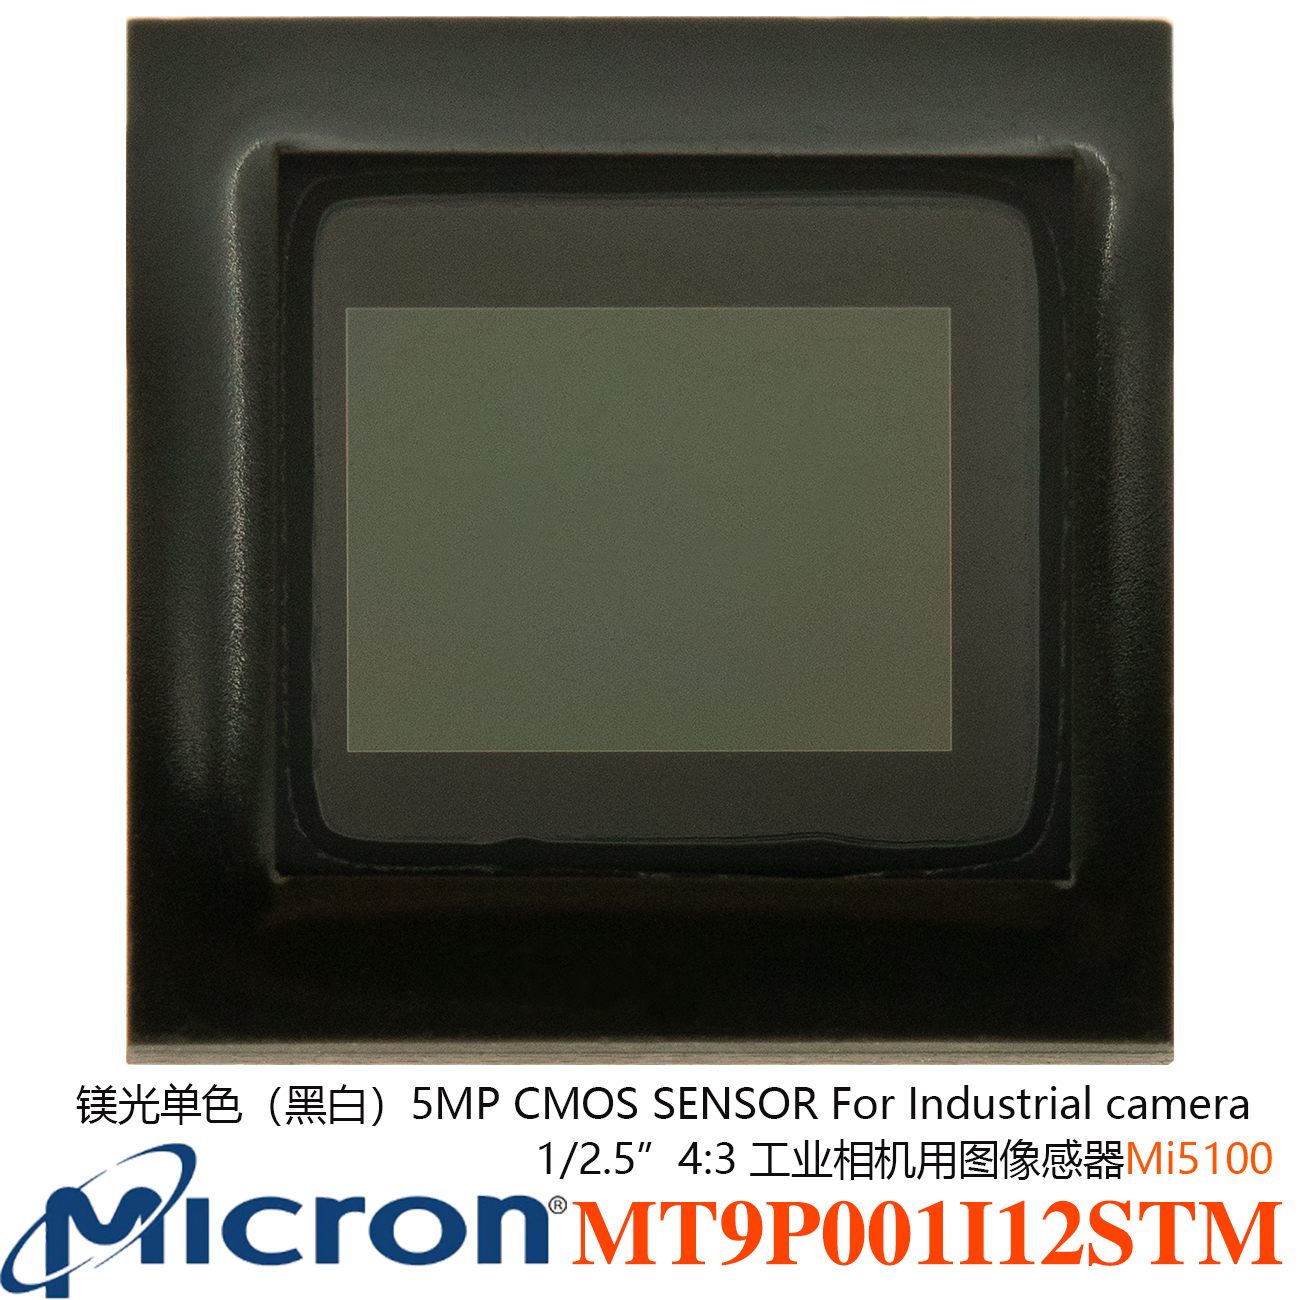 MT9P001I12STM，MI5100黑白芯片，mi5100单色sensor,MICRON APTINA ONSEMI 5MP monothrome image sensor，1/2.5-INCH Monochrome sensor, b/w(_black/white) CMOS IMAGE SENSOR, FOR Industrial camera cmos sensor，镁光安森美5百万像素图像传感器，黑白单色图像传感器，工业相机cmos，汽车平衡仪检测设备摄像头cmos感光芯片。